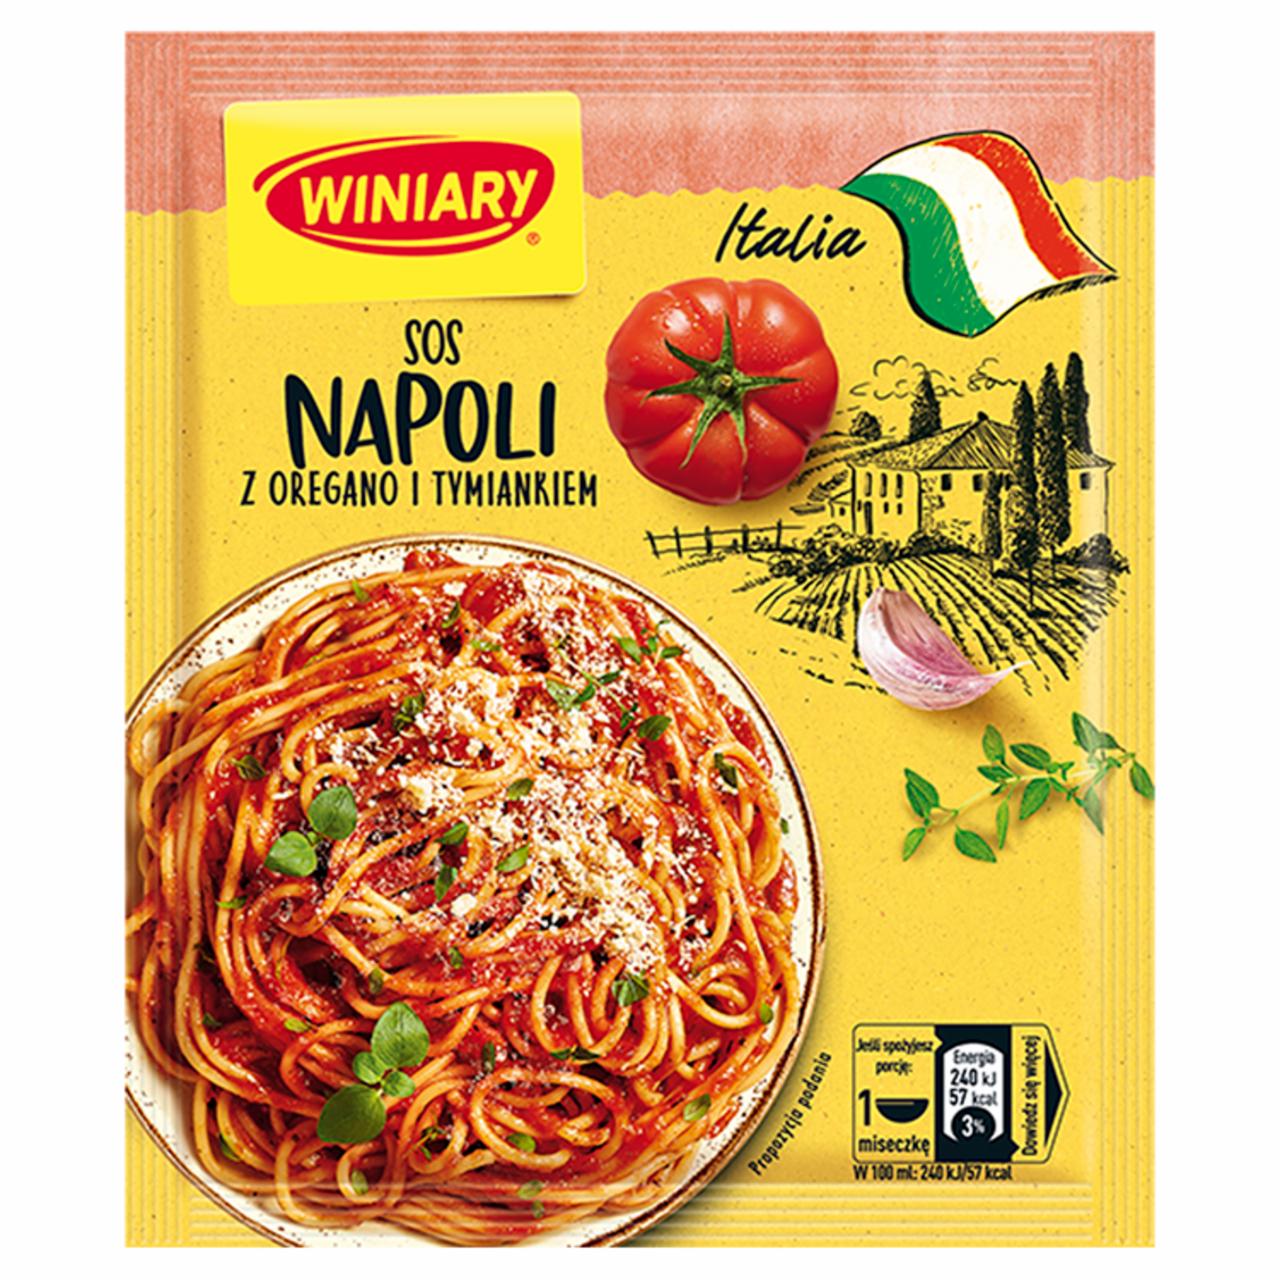 Photo - Winiary Italia Napoli Sauce with Oregano and Thyme 48 g